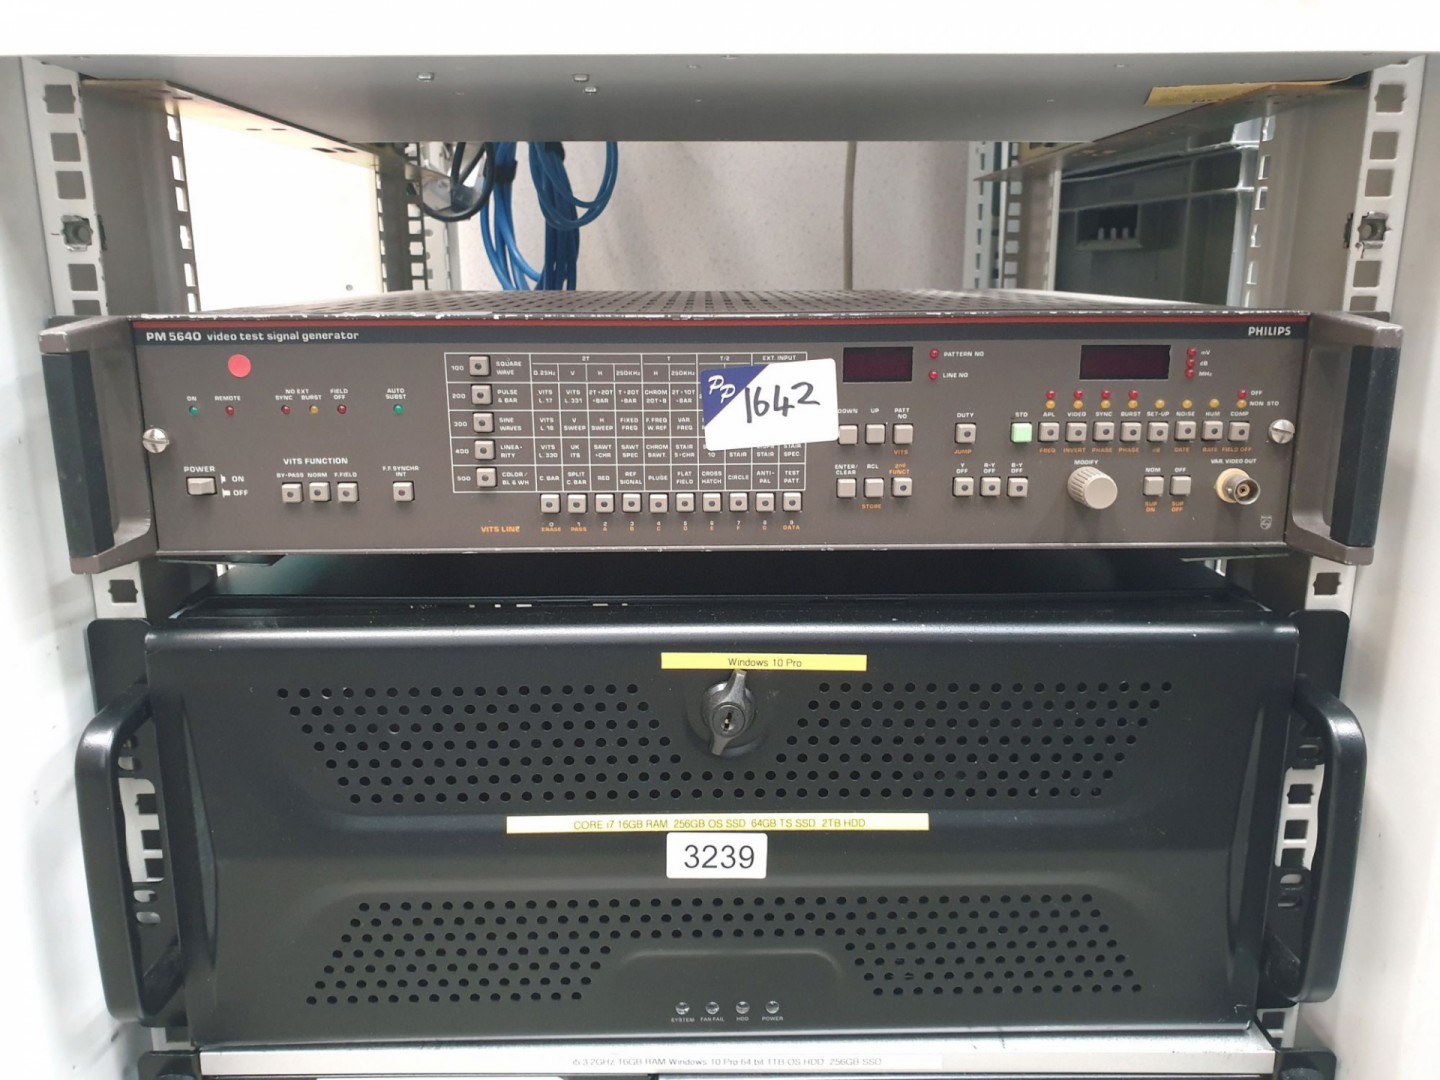 Phillips PM5640 video test signal generator